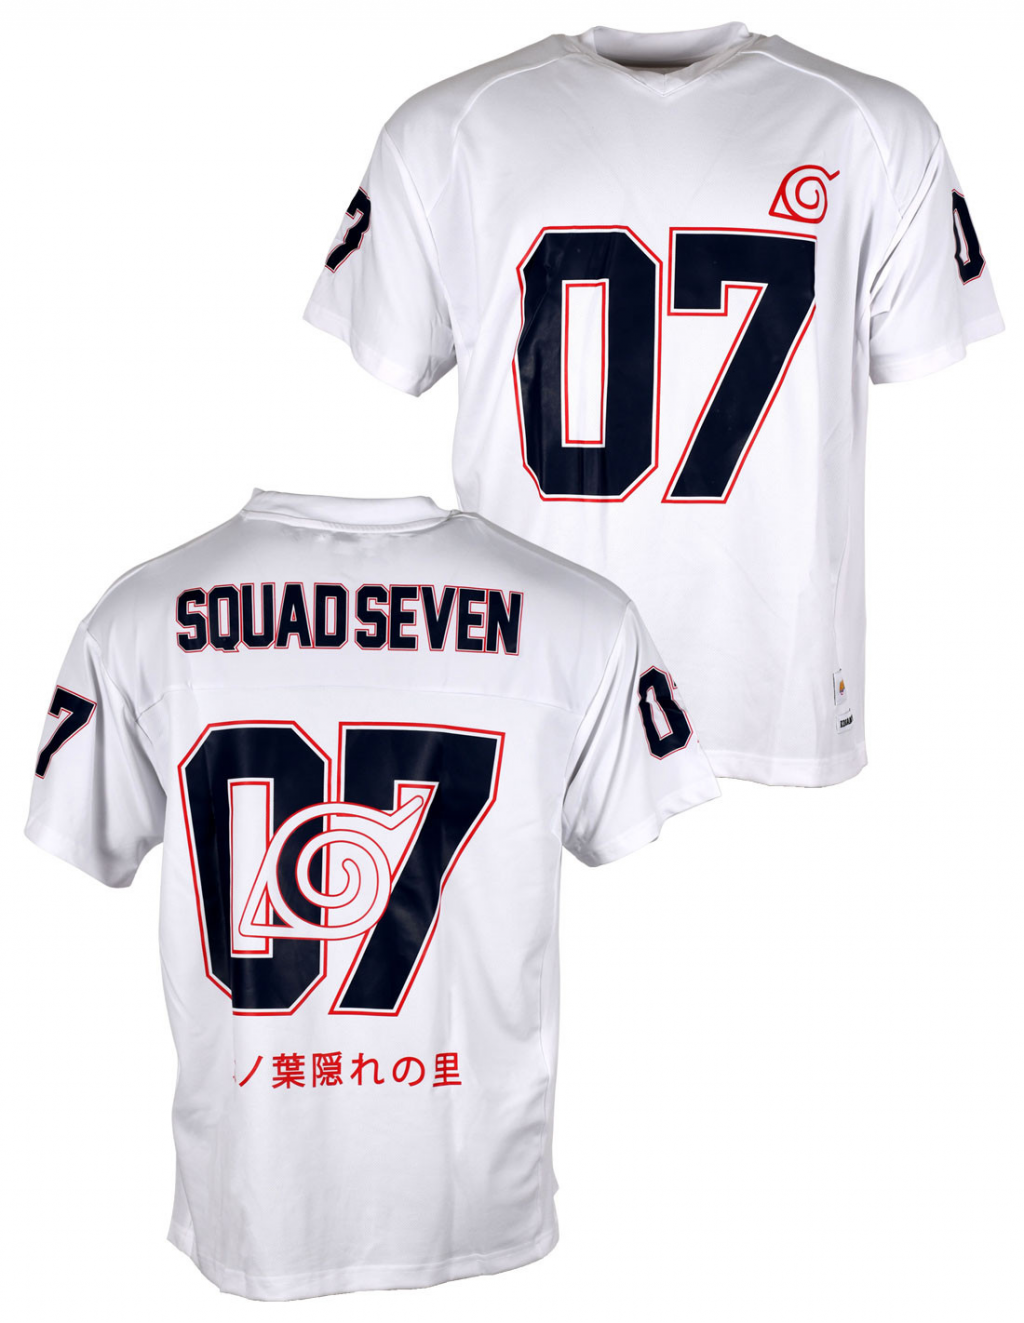 NARUTO - Squad Seven - T-Shirt Sports US Replica unisex (L)